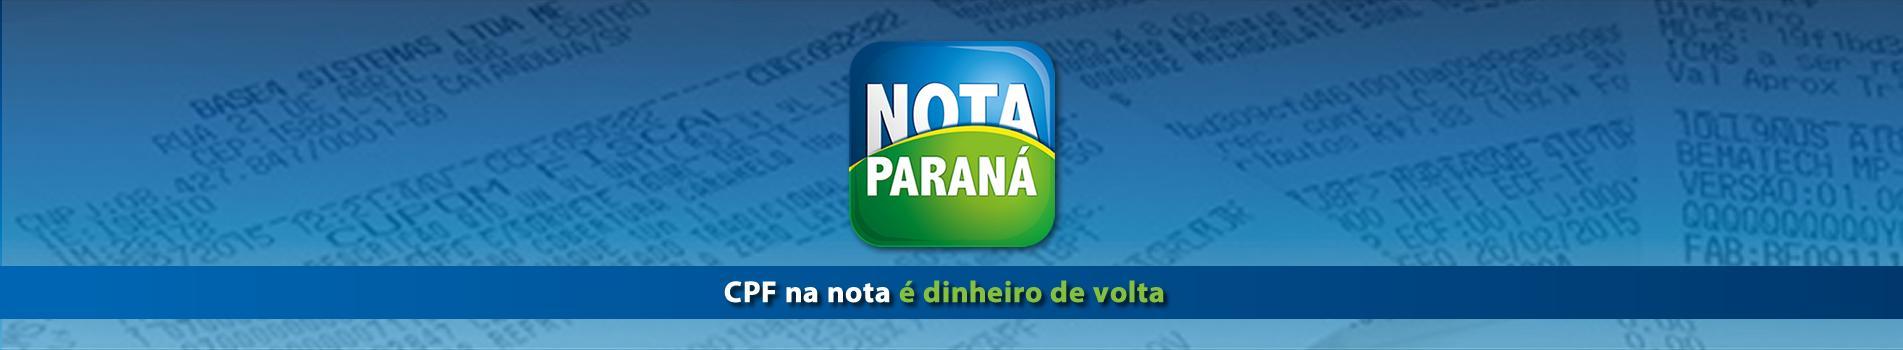 banner-notaparana